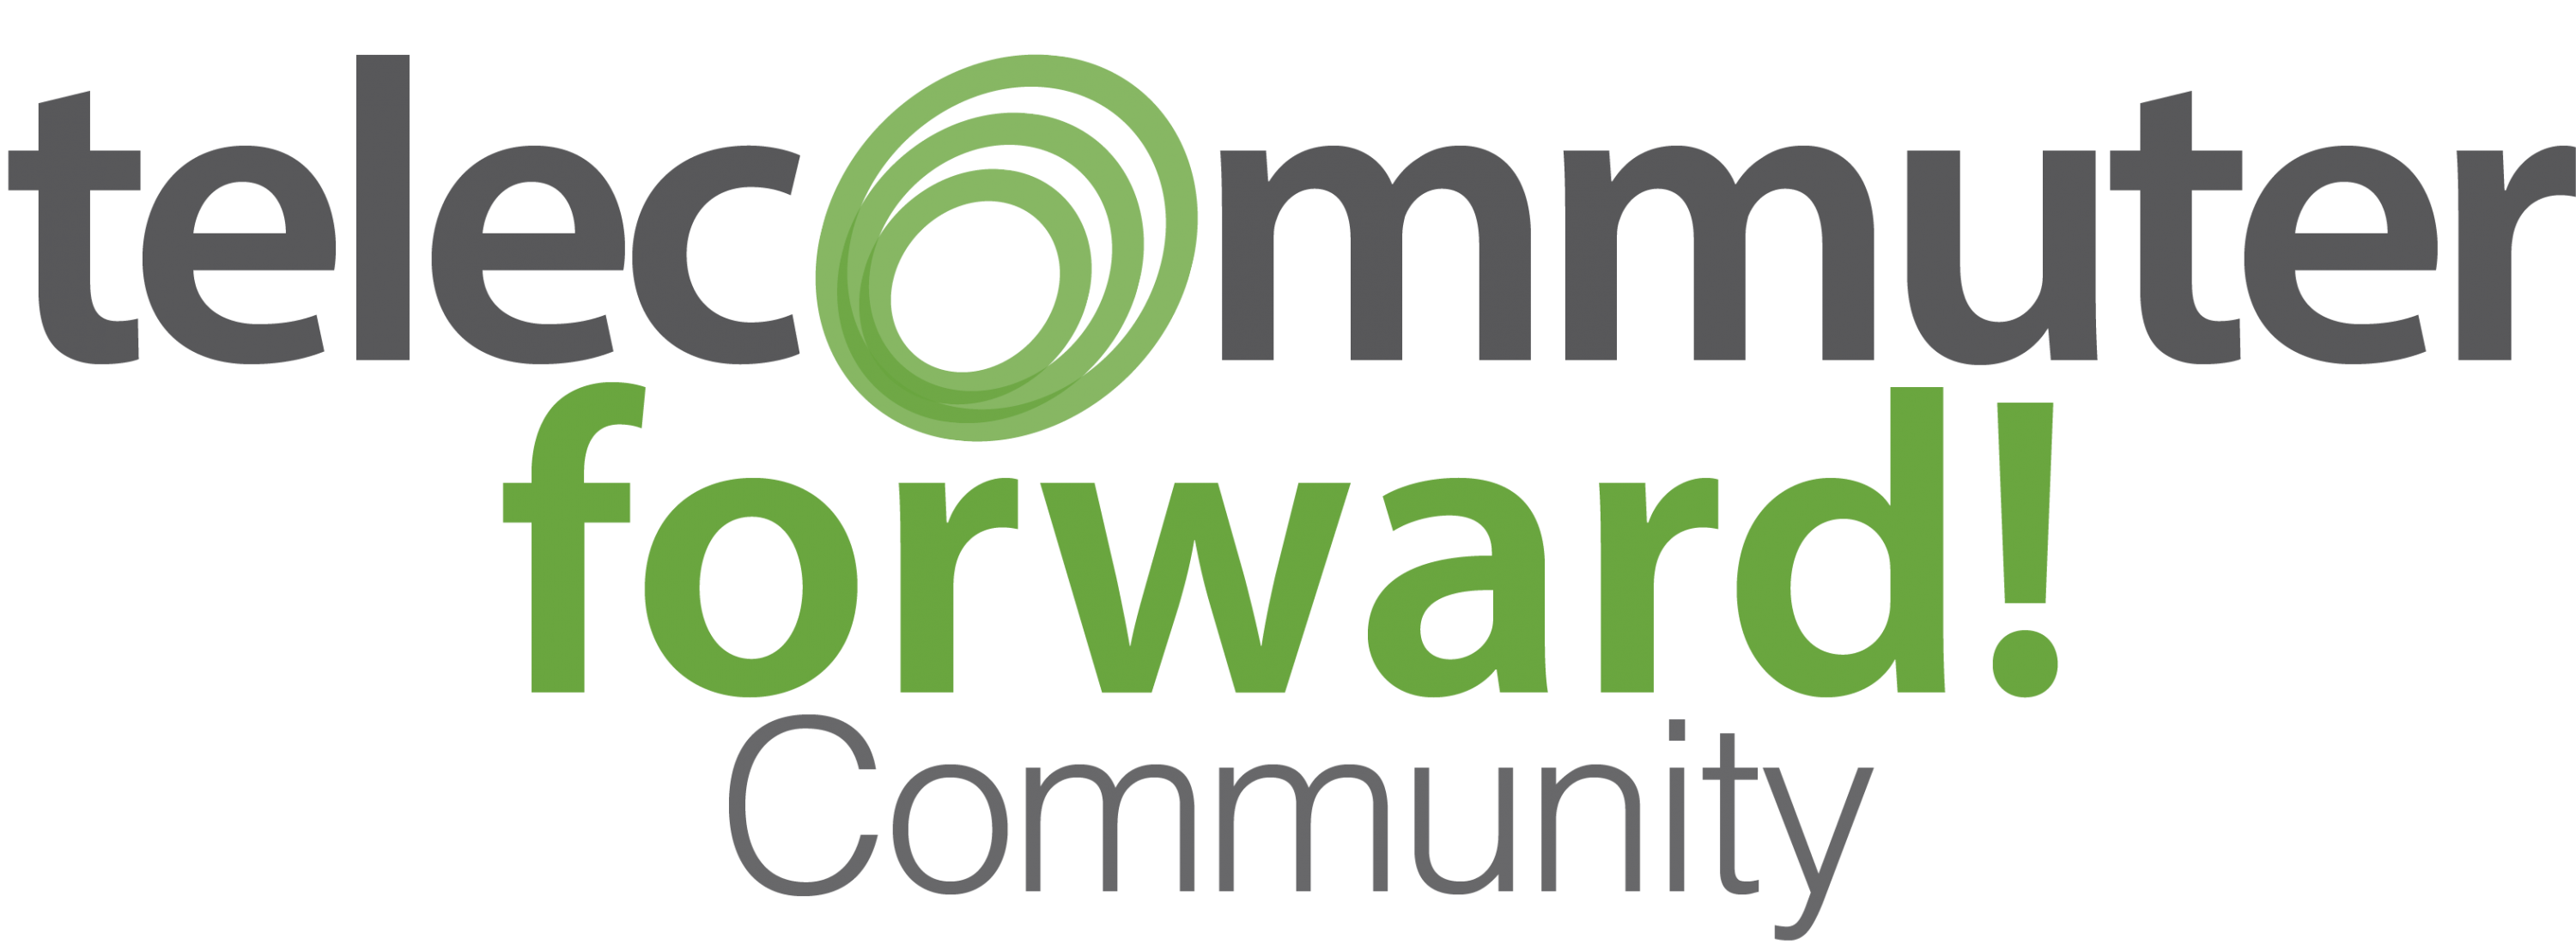 telecommuter forward community